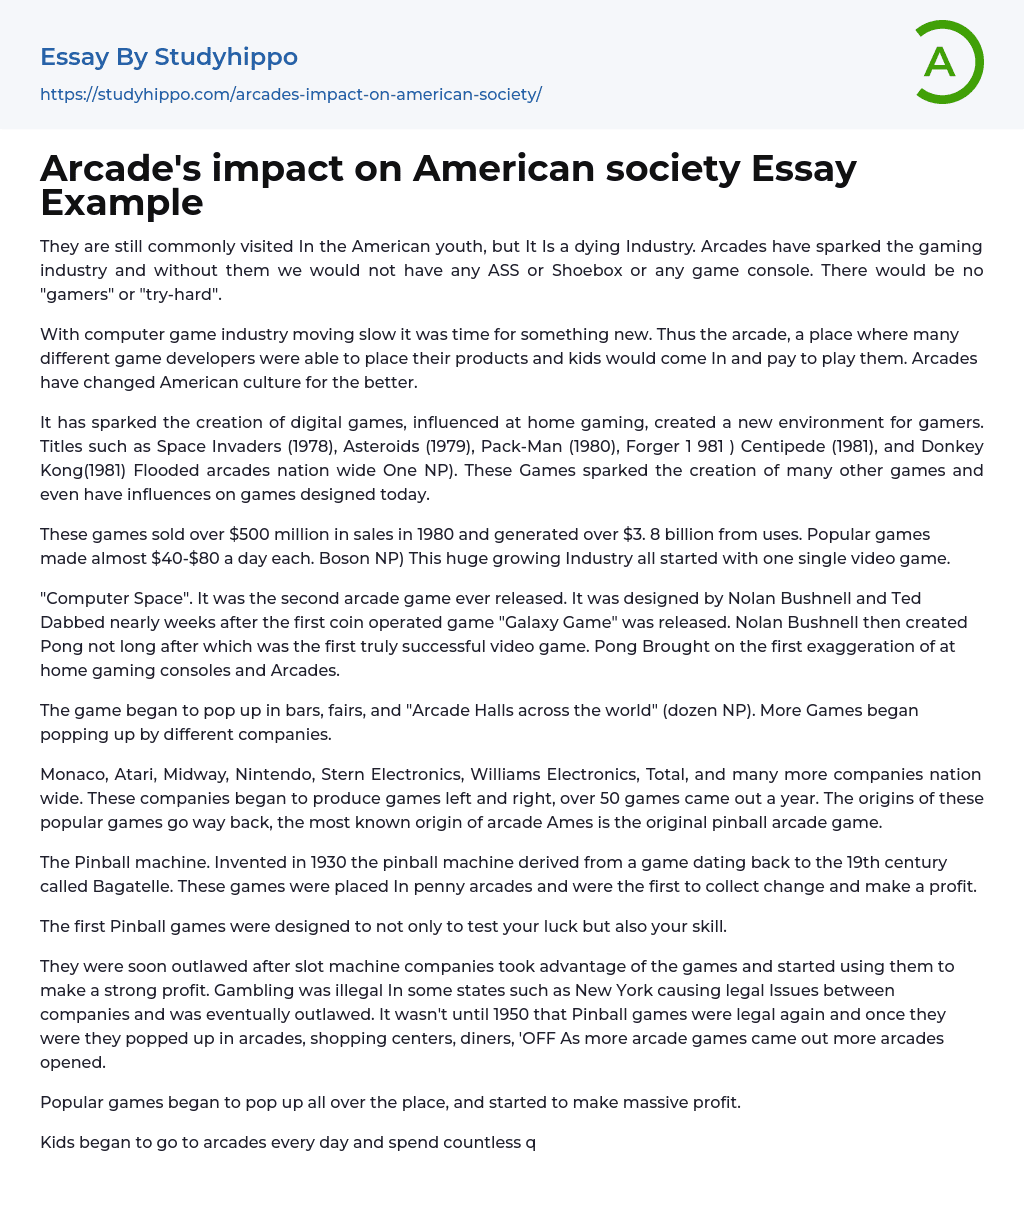 Arcade’s impact on American society Essay Example